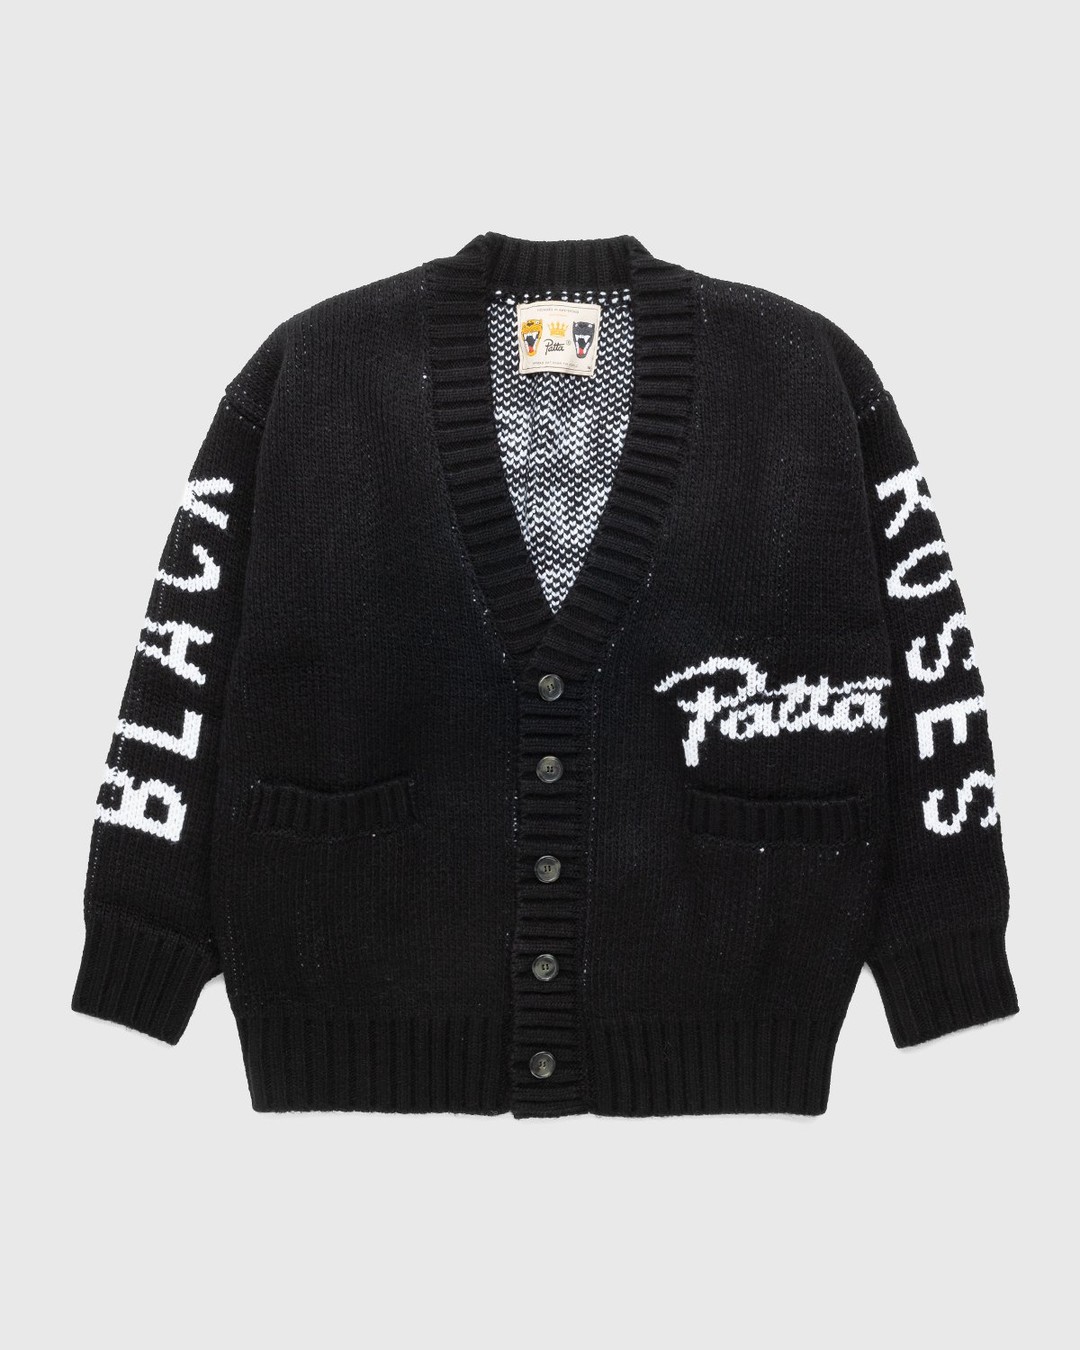 Patta – Roses Knitted Cardigan Black - Knitwear - Black - Image 1